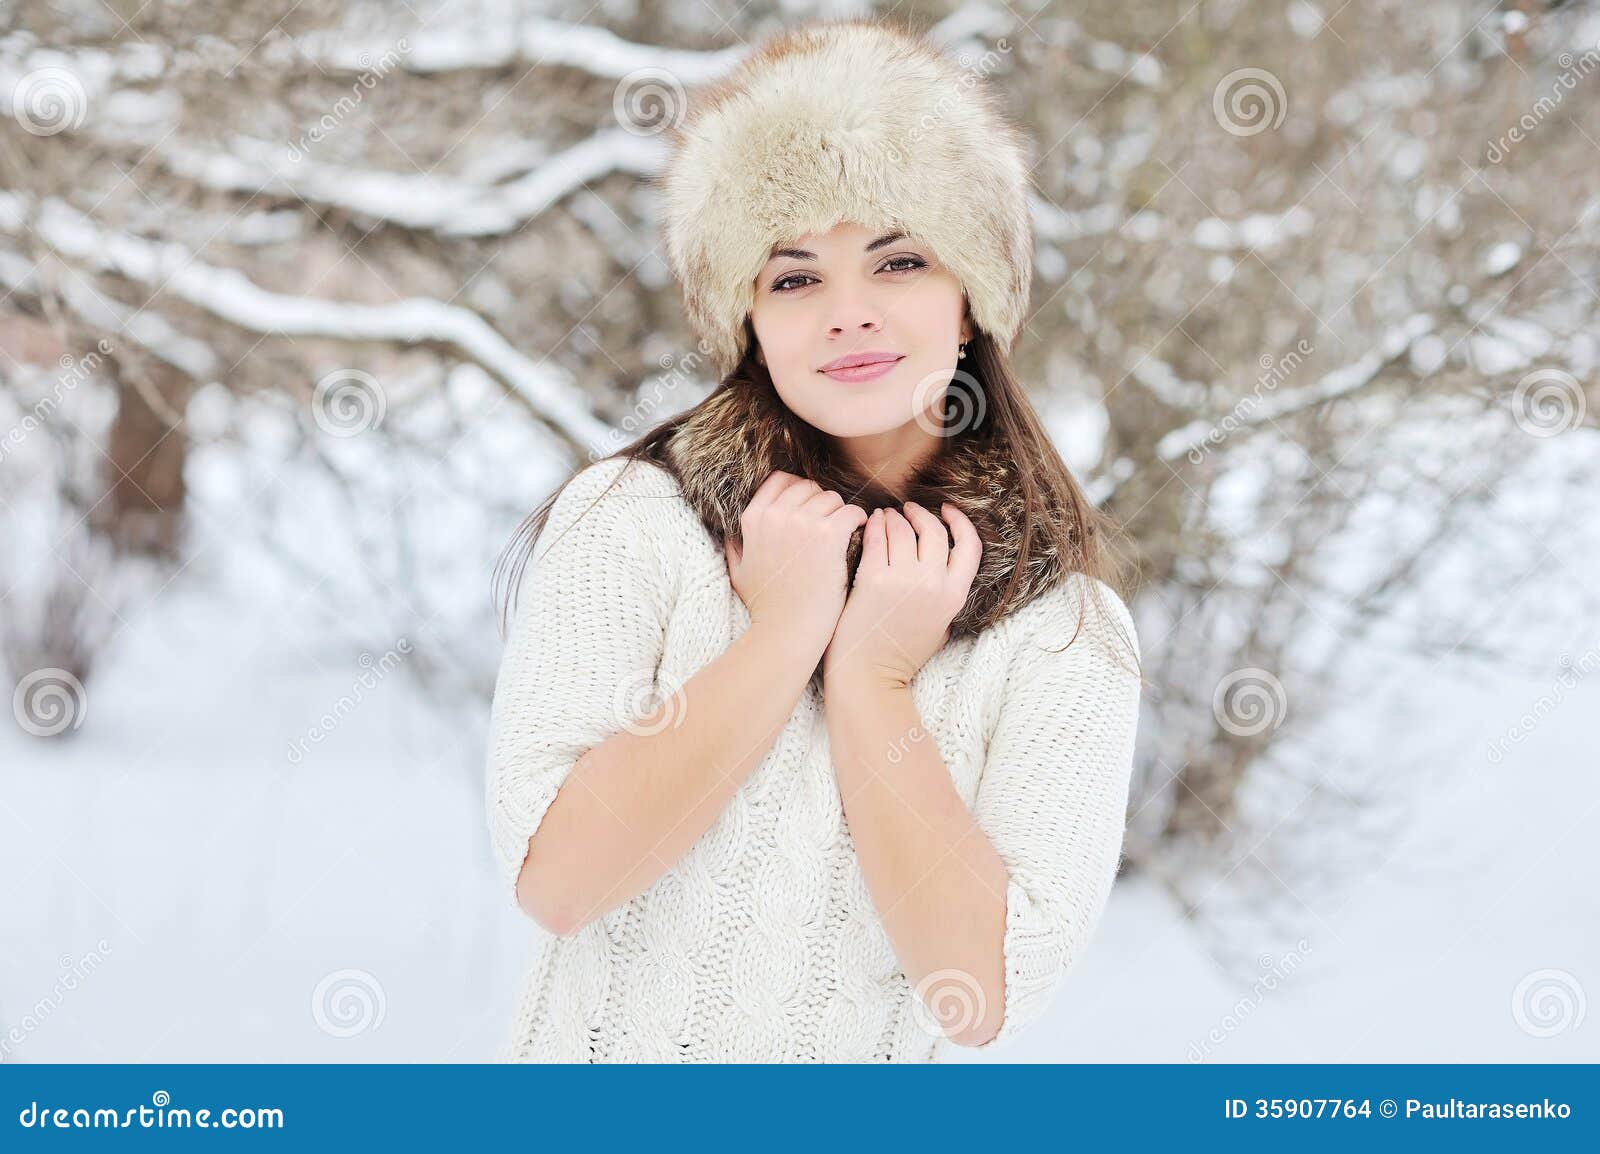 Snow Winter Woman Portrait Outdoors. Snowy White Winter Day Stock Photo ...